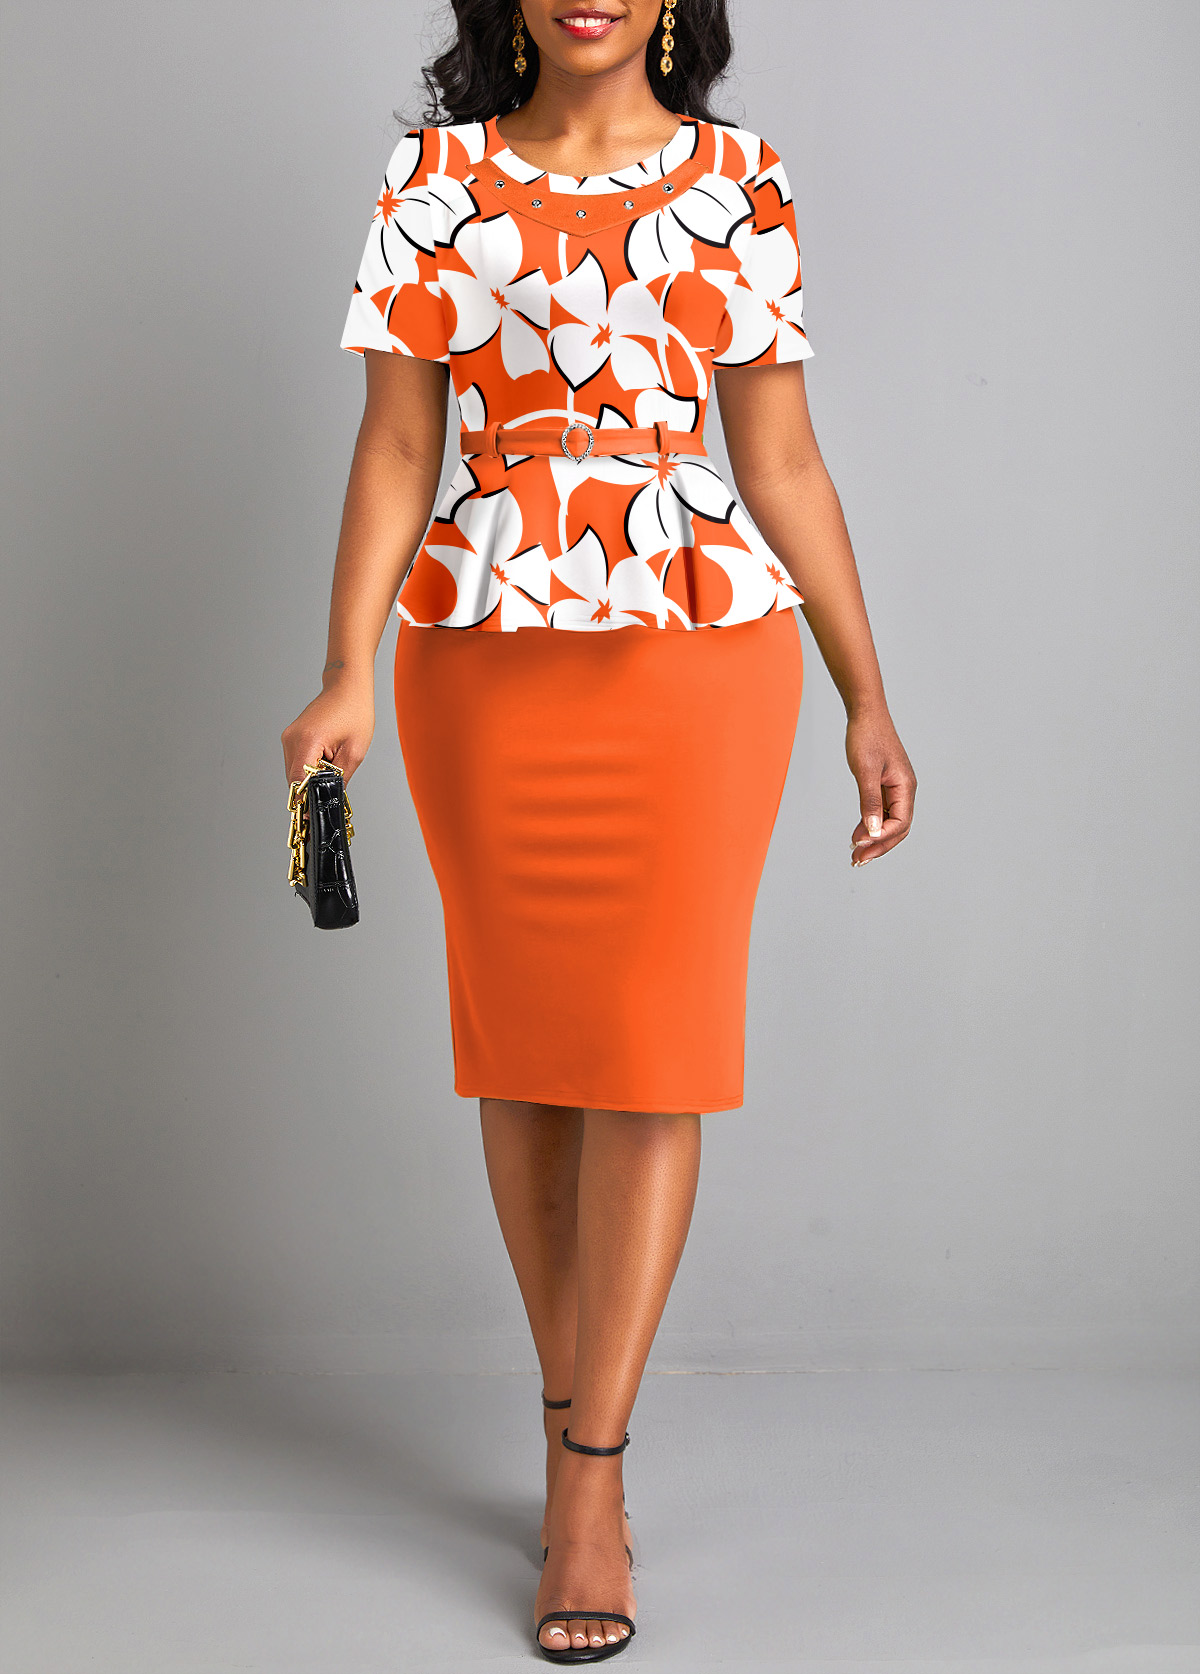 ROTITA Fake 2in1 Floral Print Orange Belted Bodycon Dress